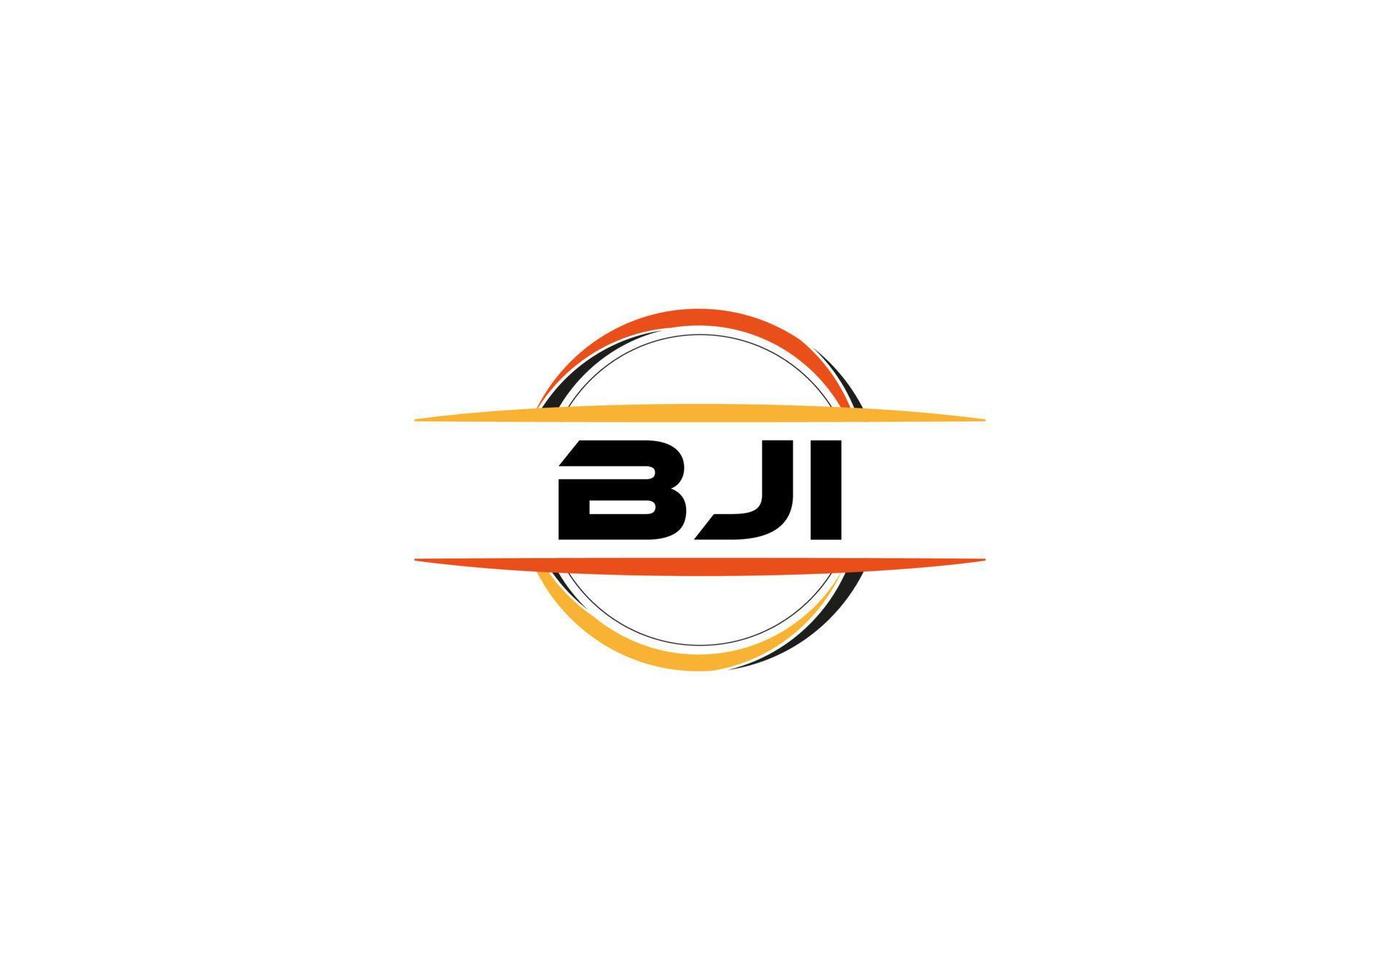 bji carta realeza elipse forma logotipo. bji escova arte logotipo. bji logotipo para uma empresa, negócios, e comercial usar. vetor